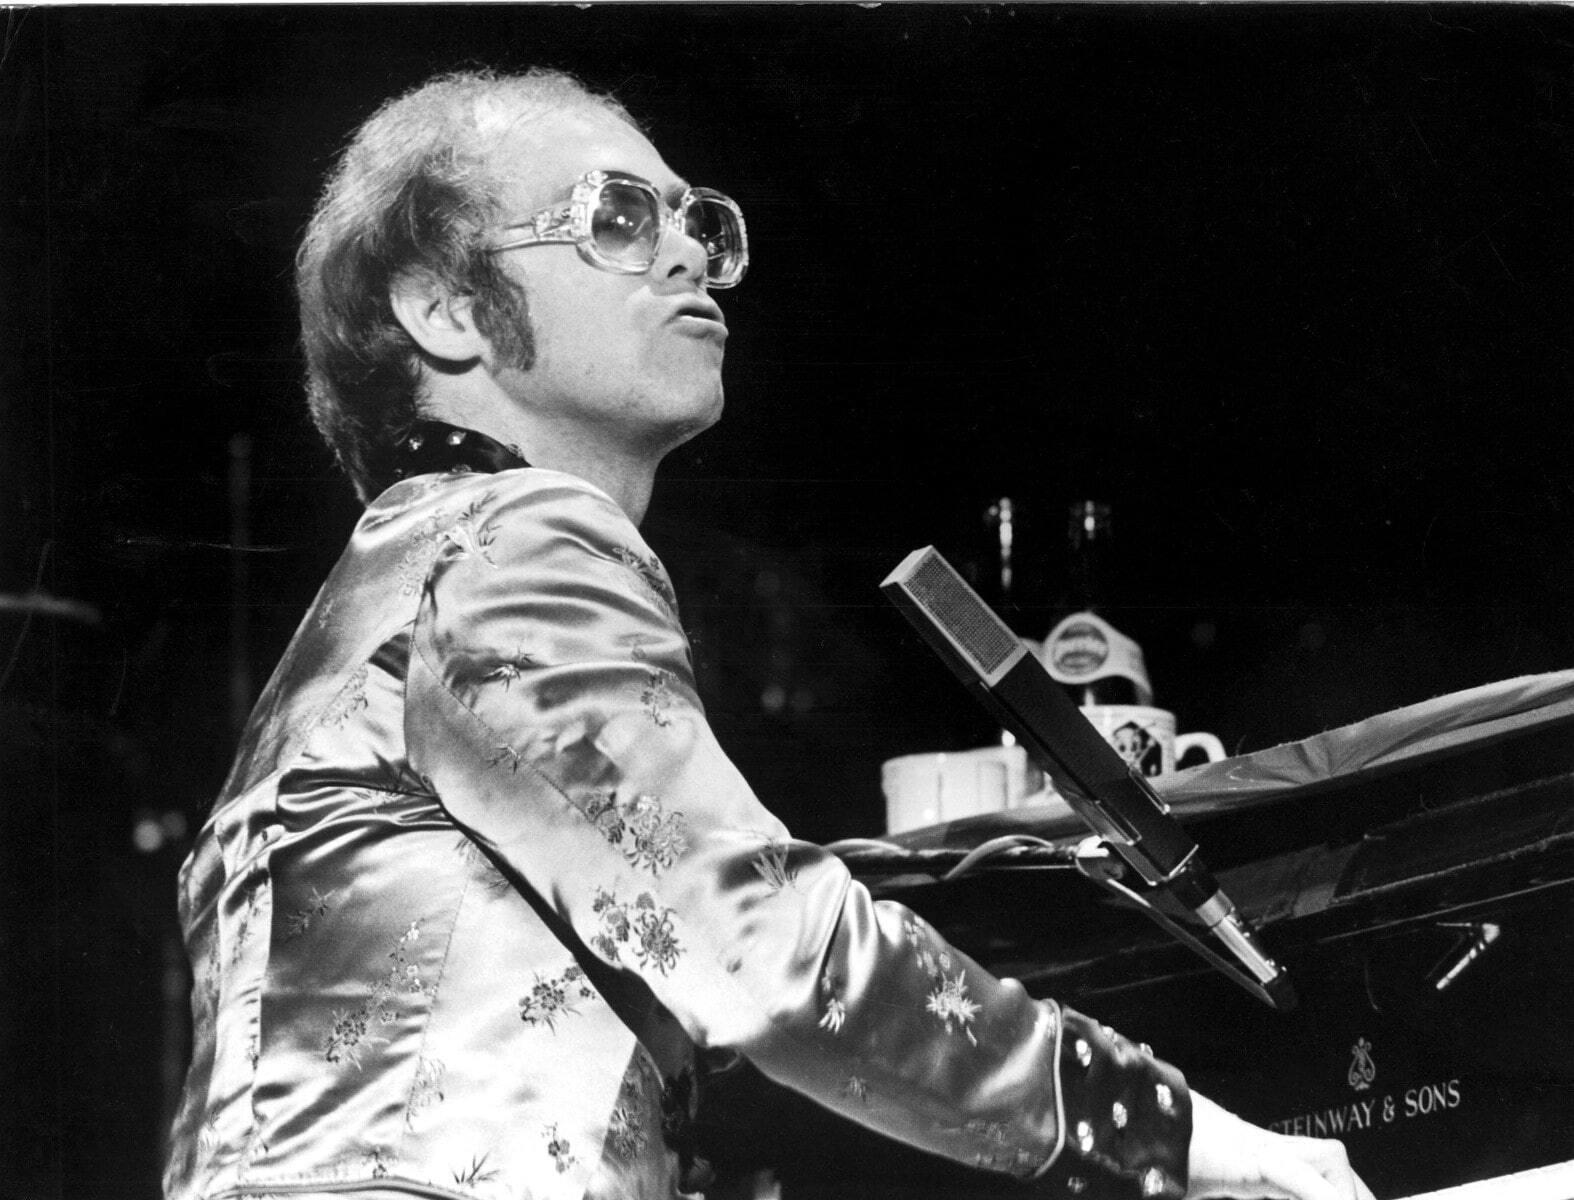 The legendary life and career of Elton John